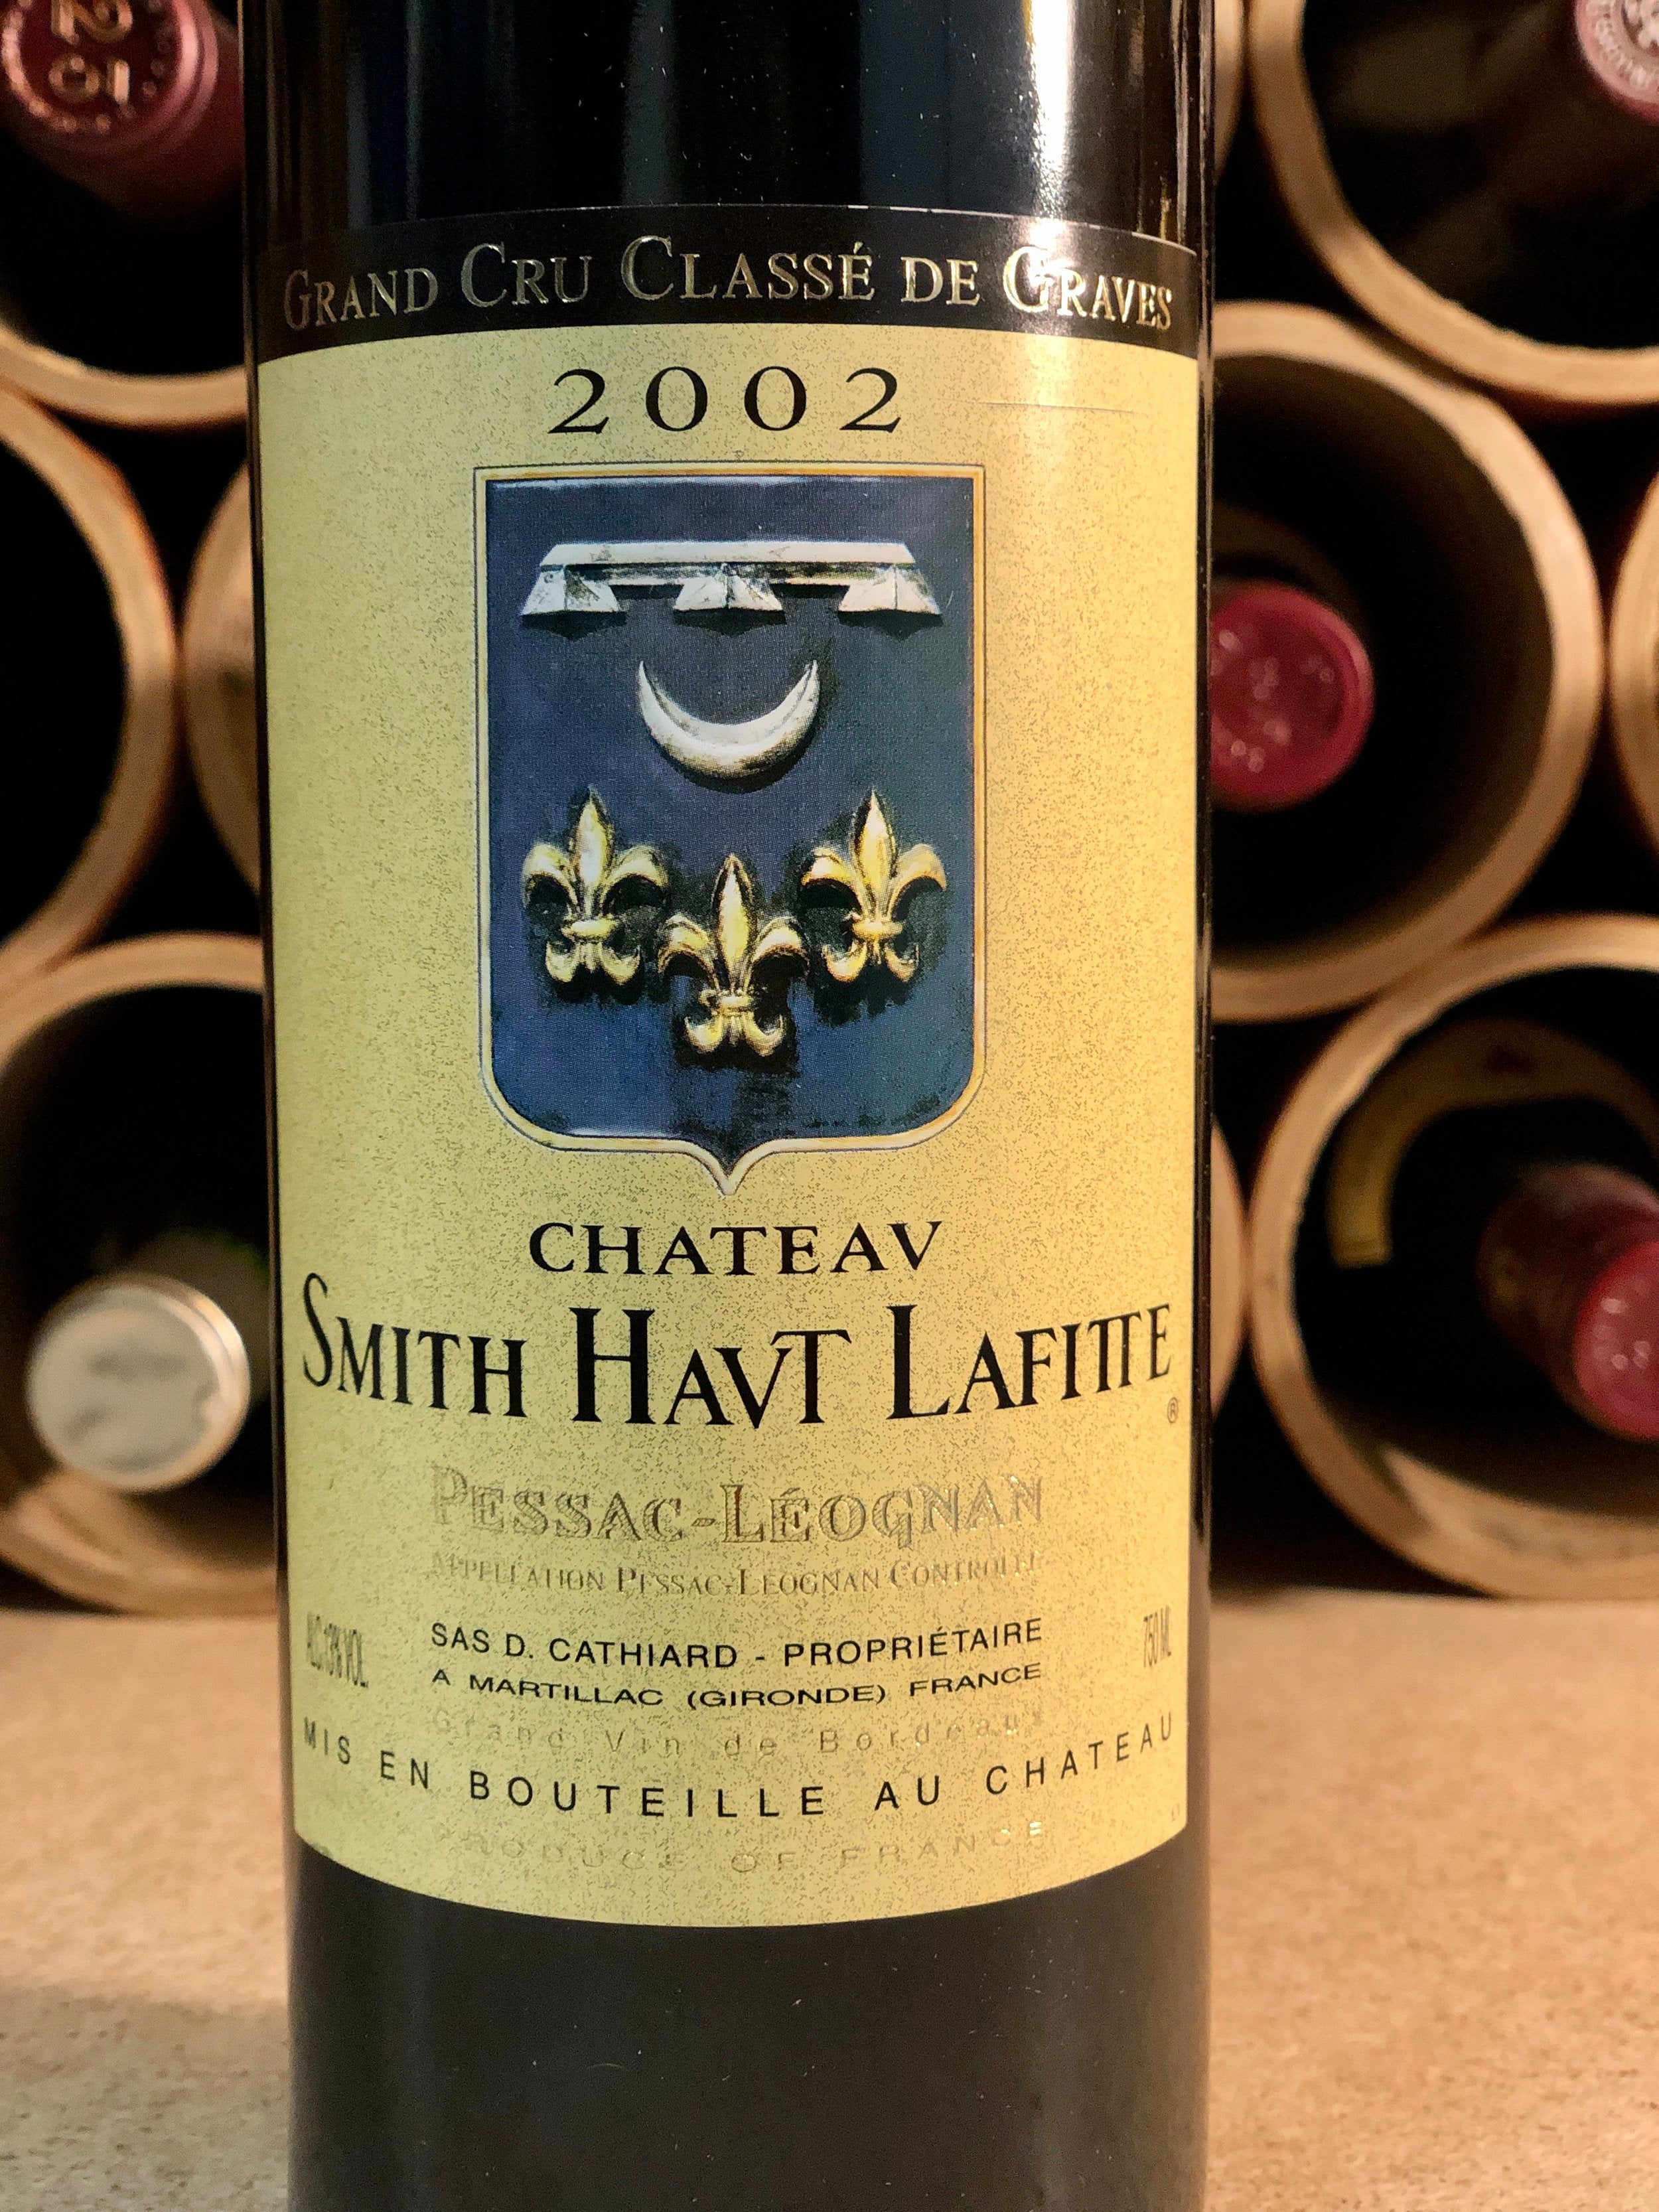 Smith Haut Lafitte, Pessac-Leognan (rouge) 2002